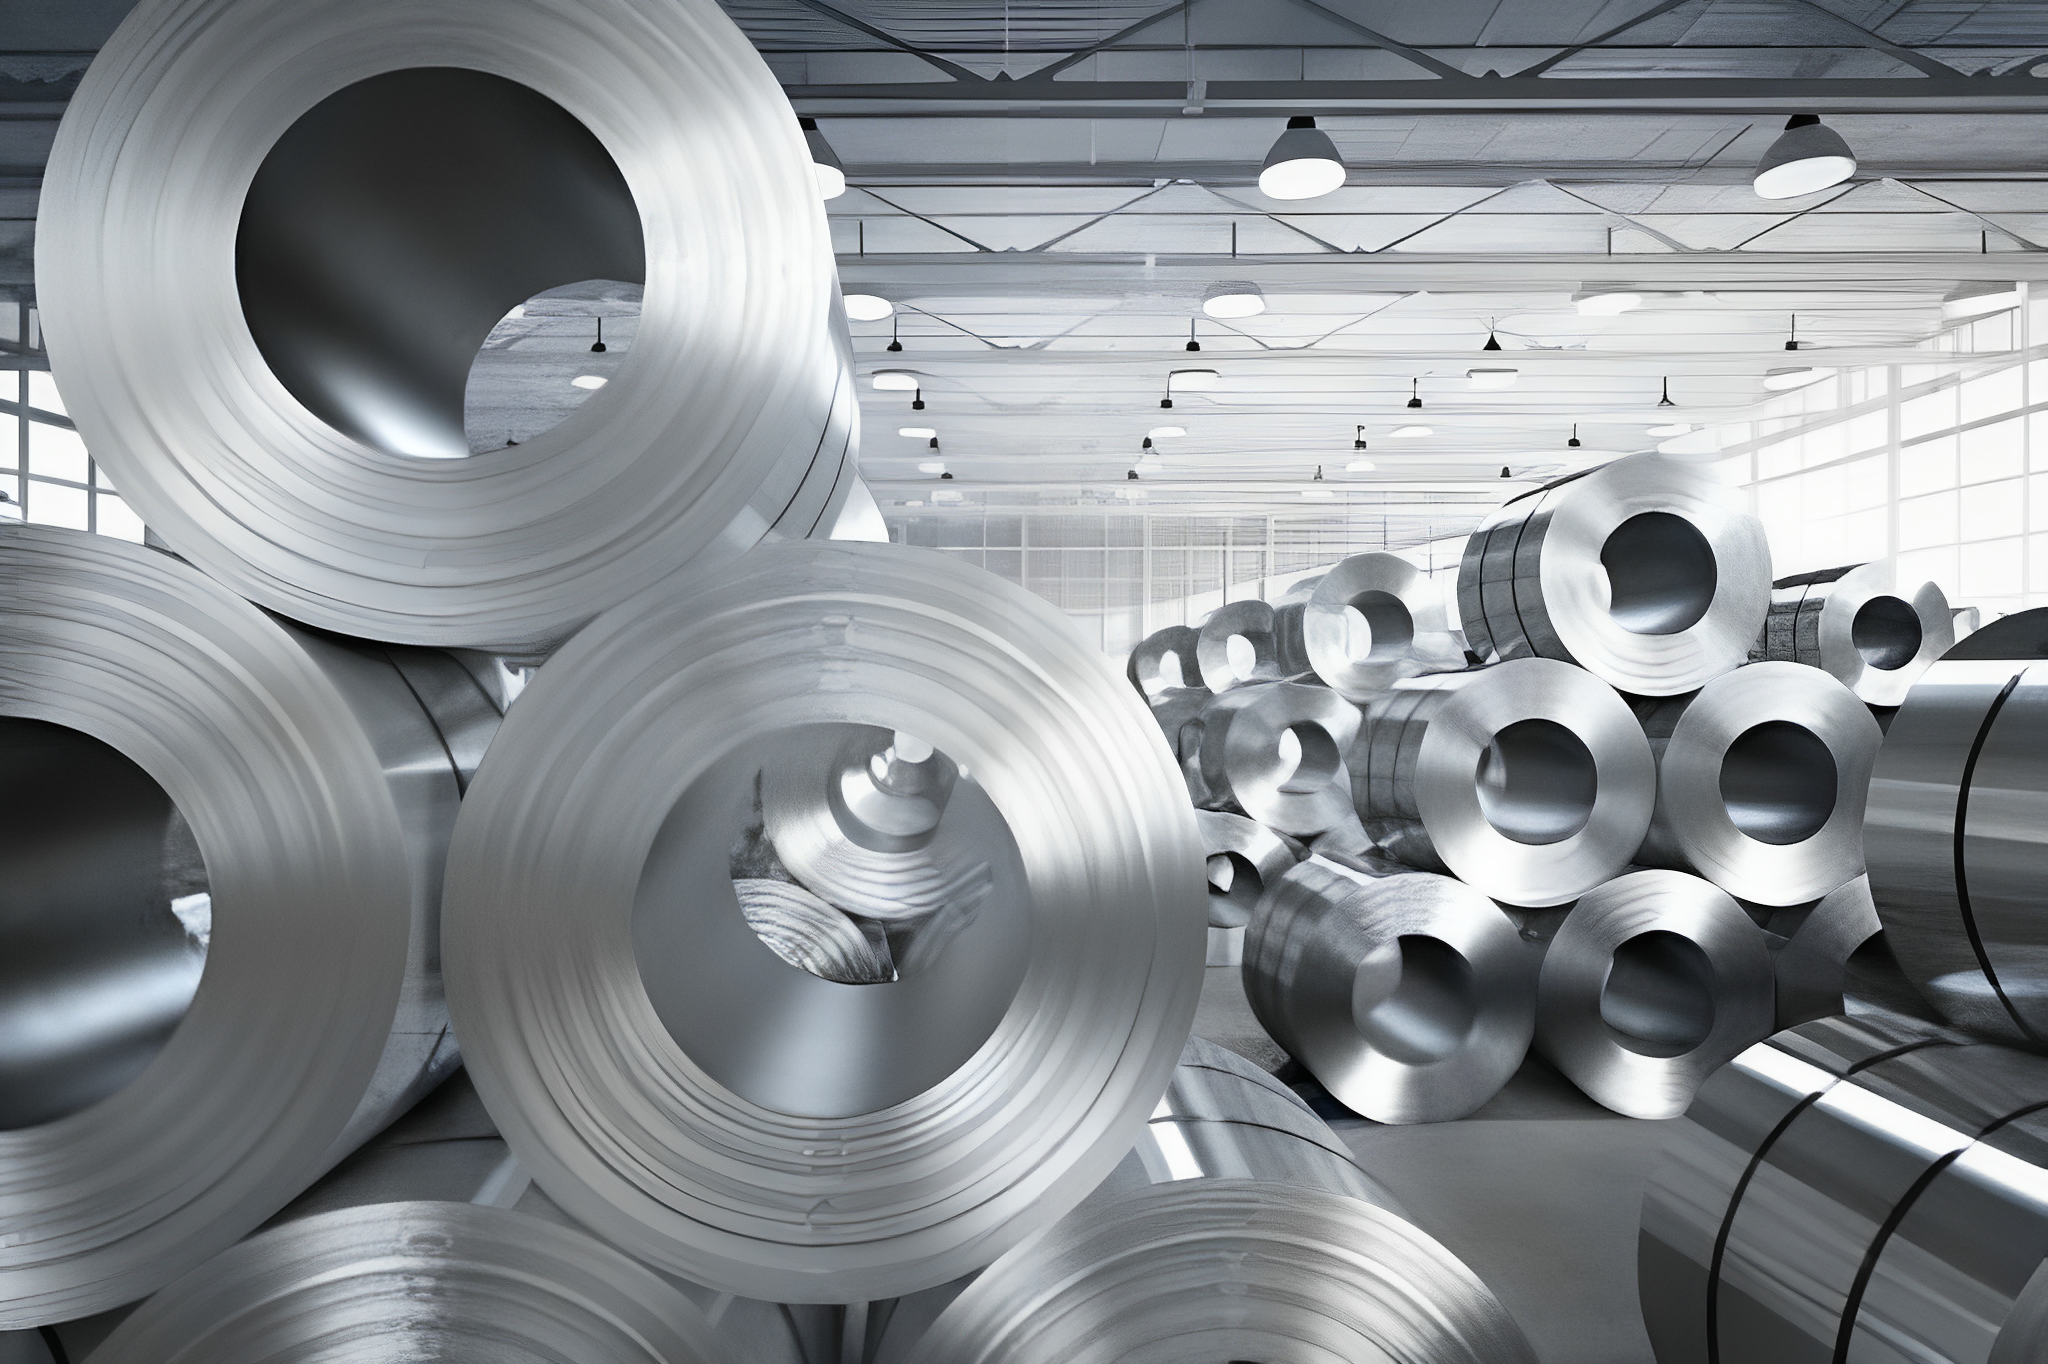 Steel and Aluminum imports